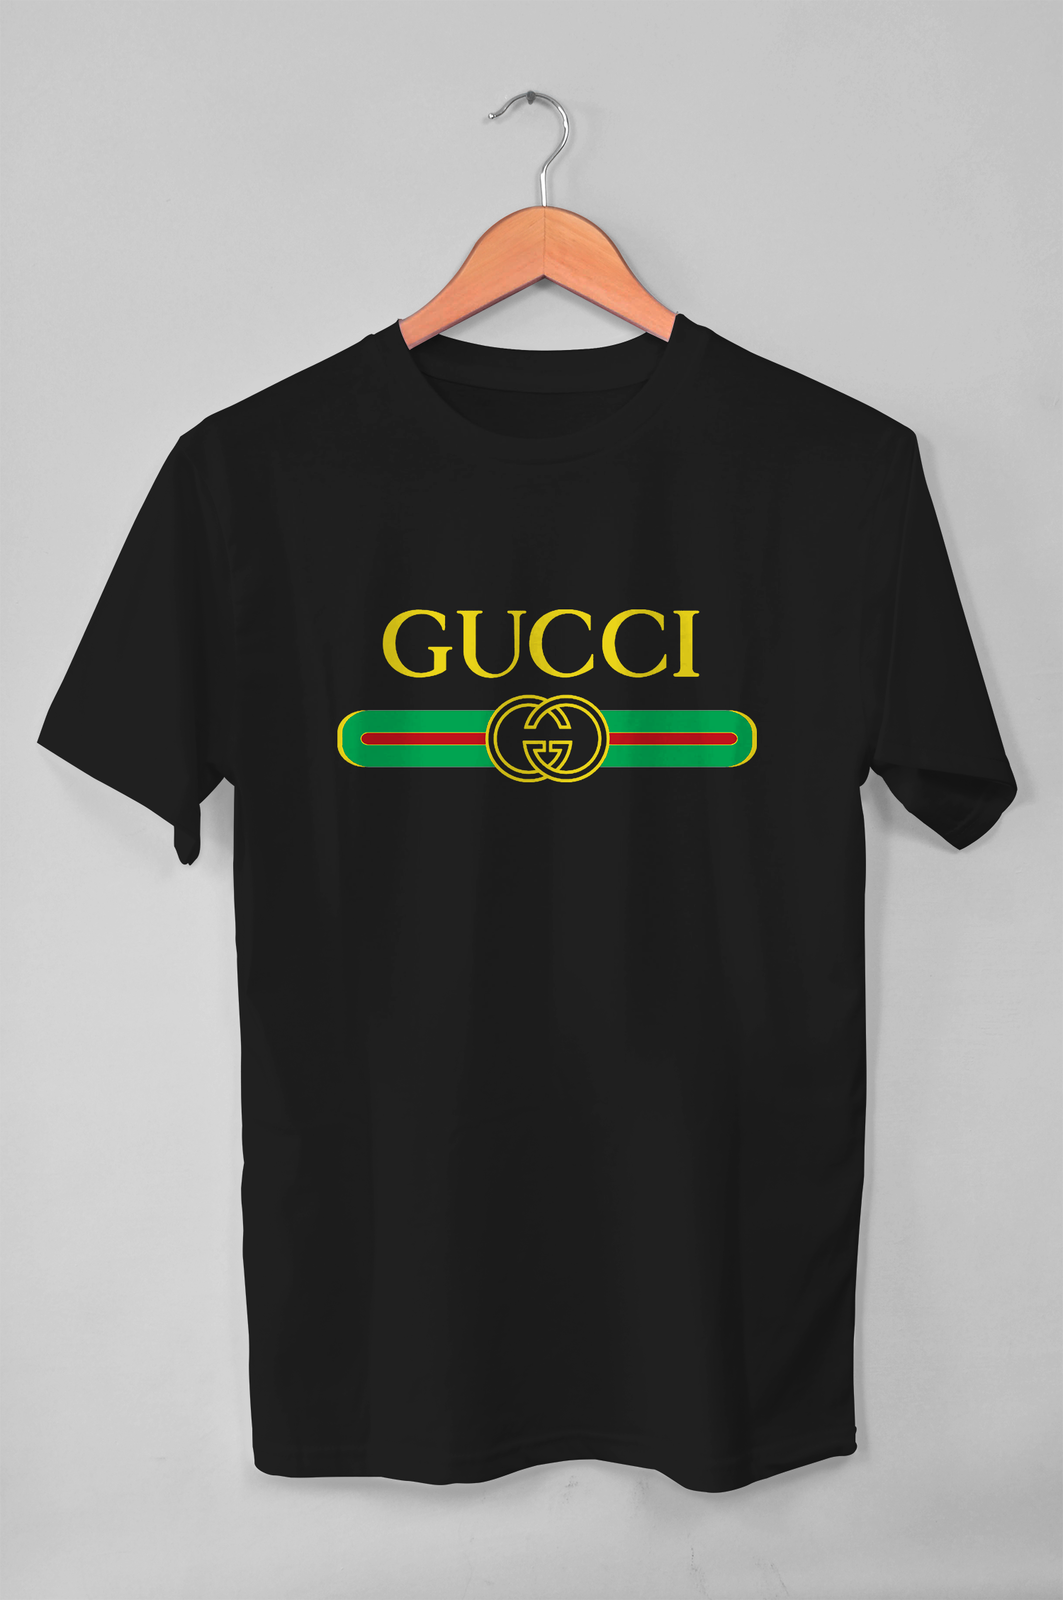 Stripe Gucci Shirt Band Fashion Famous Tee Tshirt Unisex Men Women S-3XL - $18.99 - $23.99